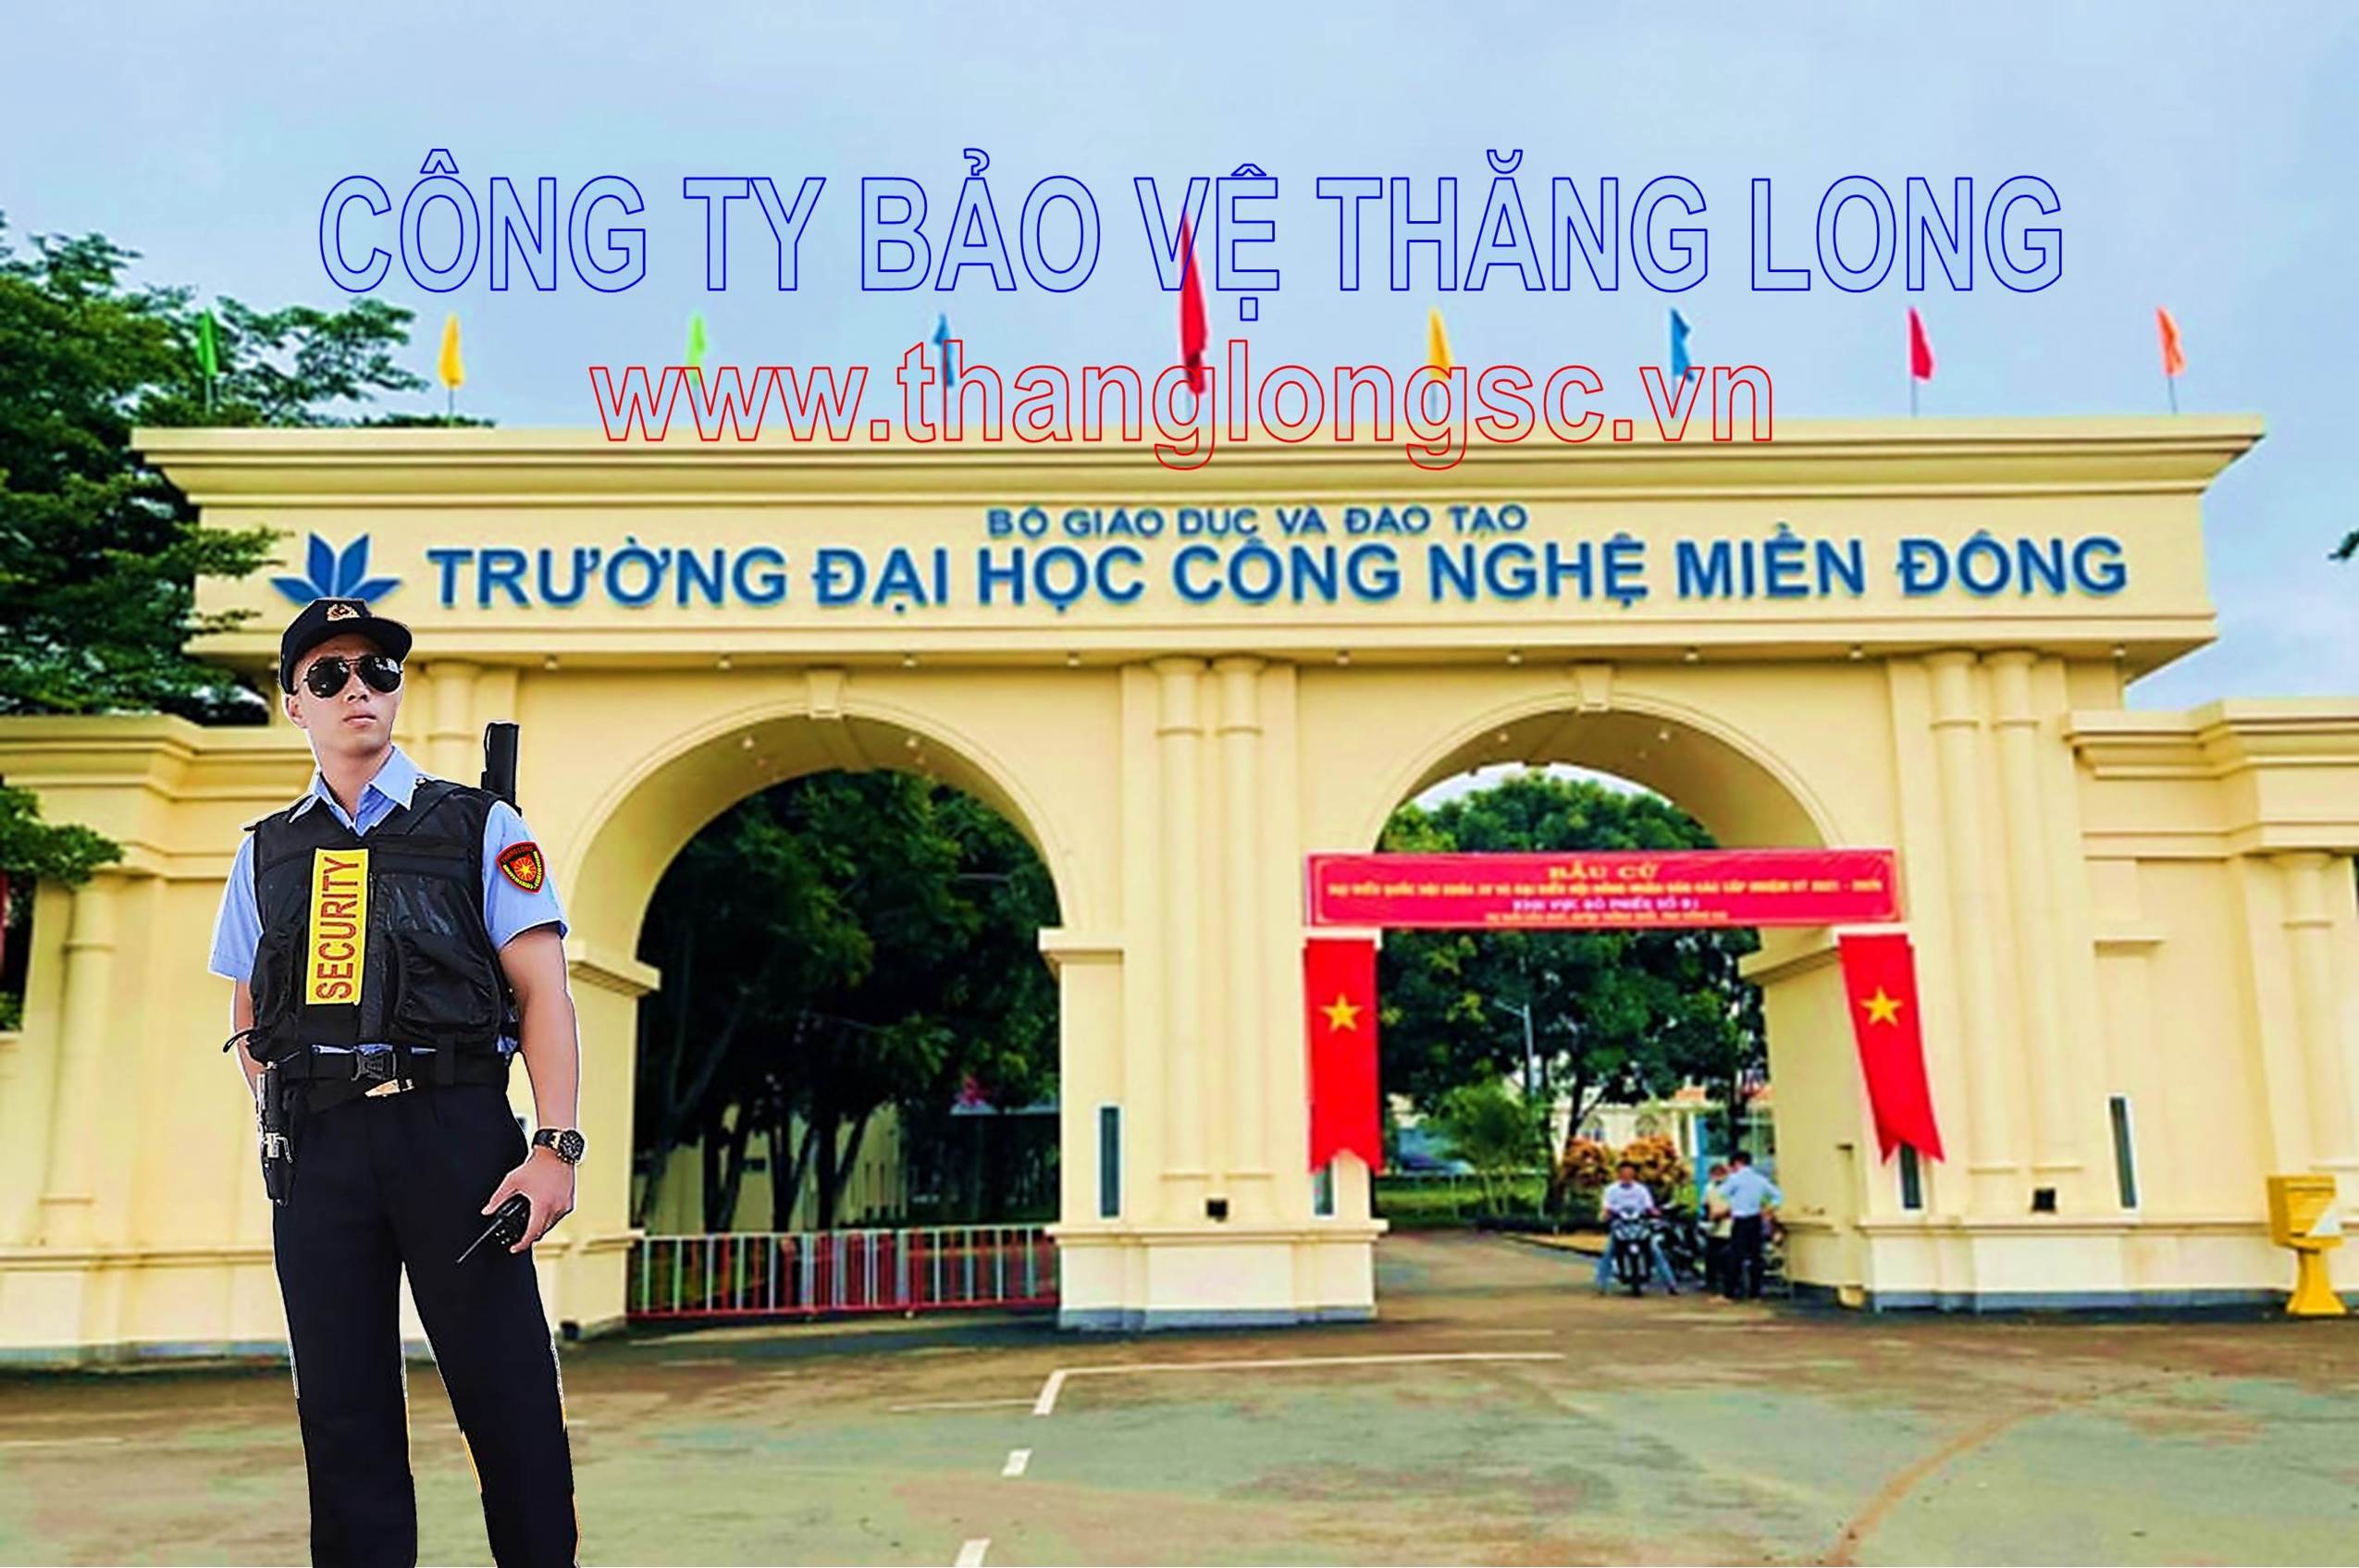 Truong Hoc